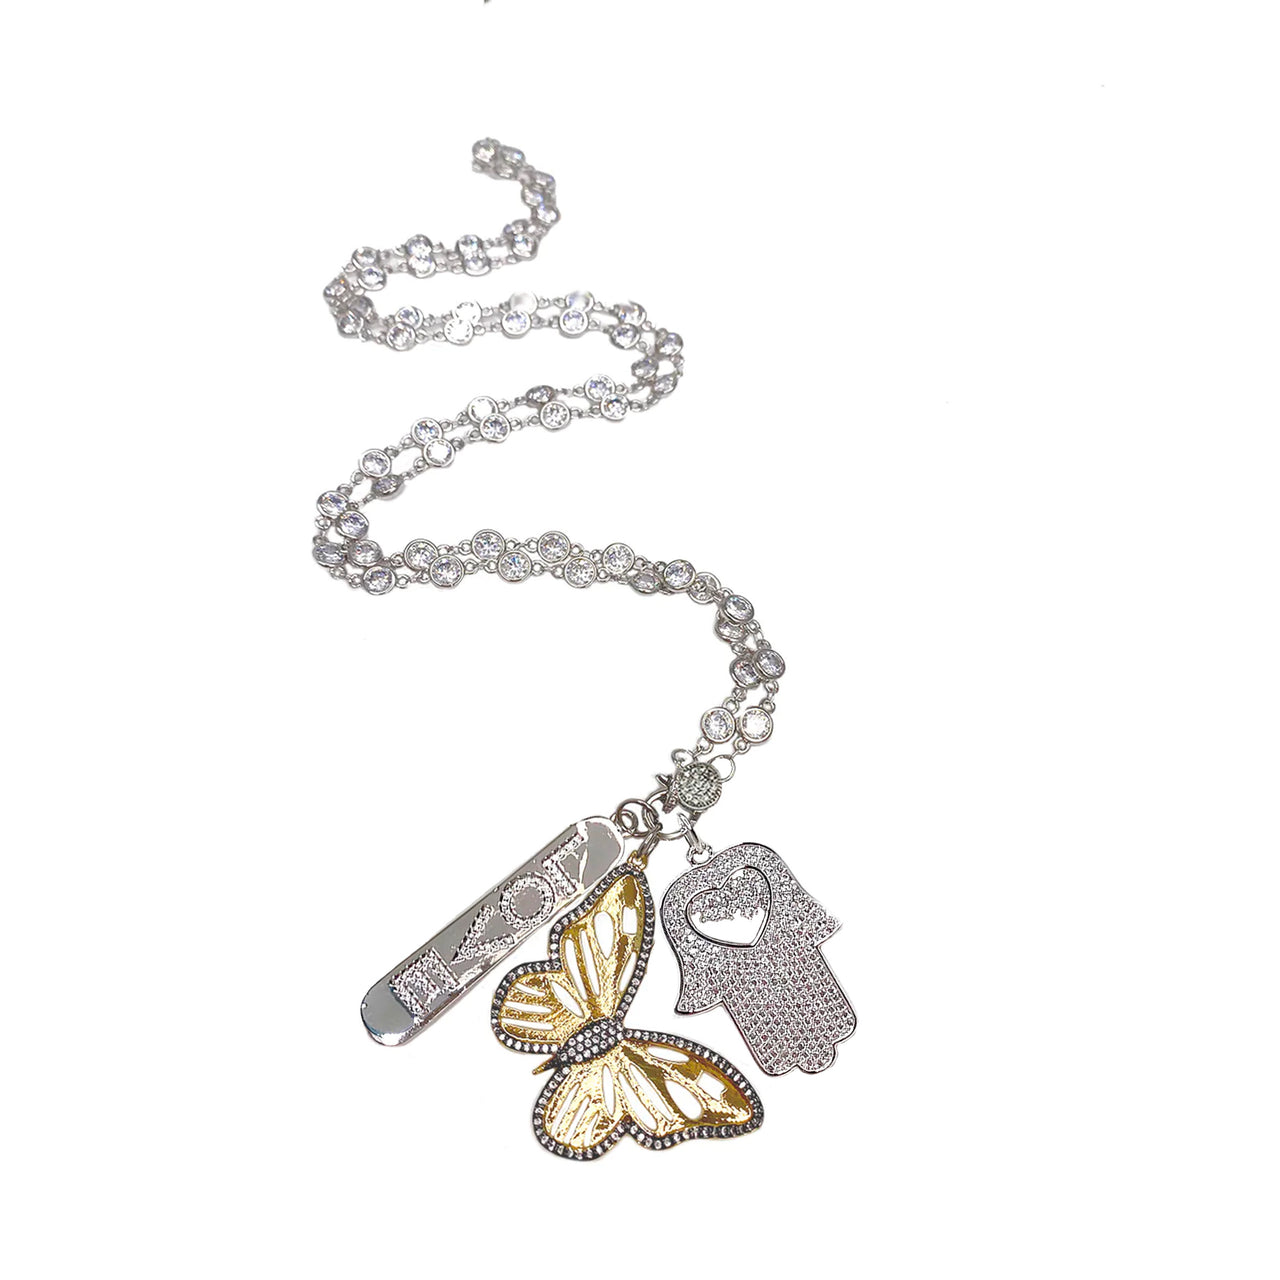 Danielle's Loving Butterfly Long Necklace